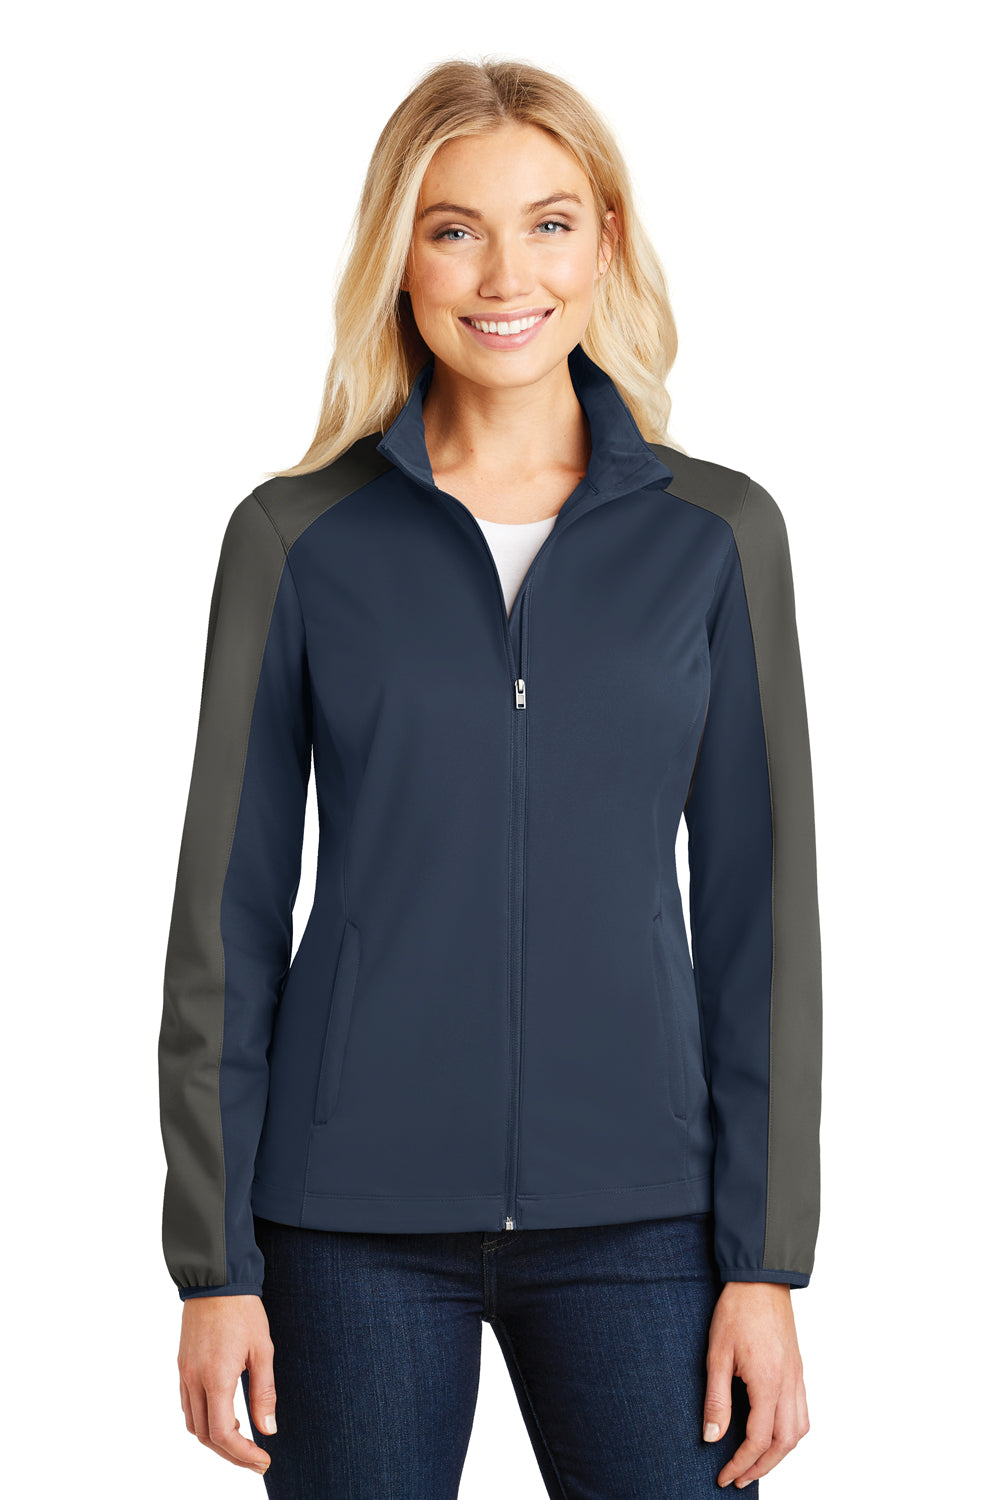 Port Authority L718 Womens Active Wind & Water Resistant Full Zip Jacket Navy Blue/Grey Front